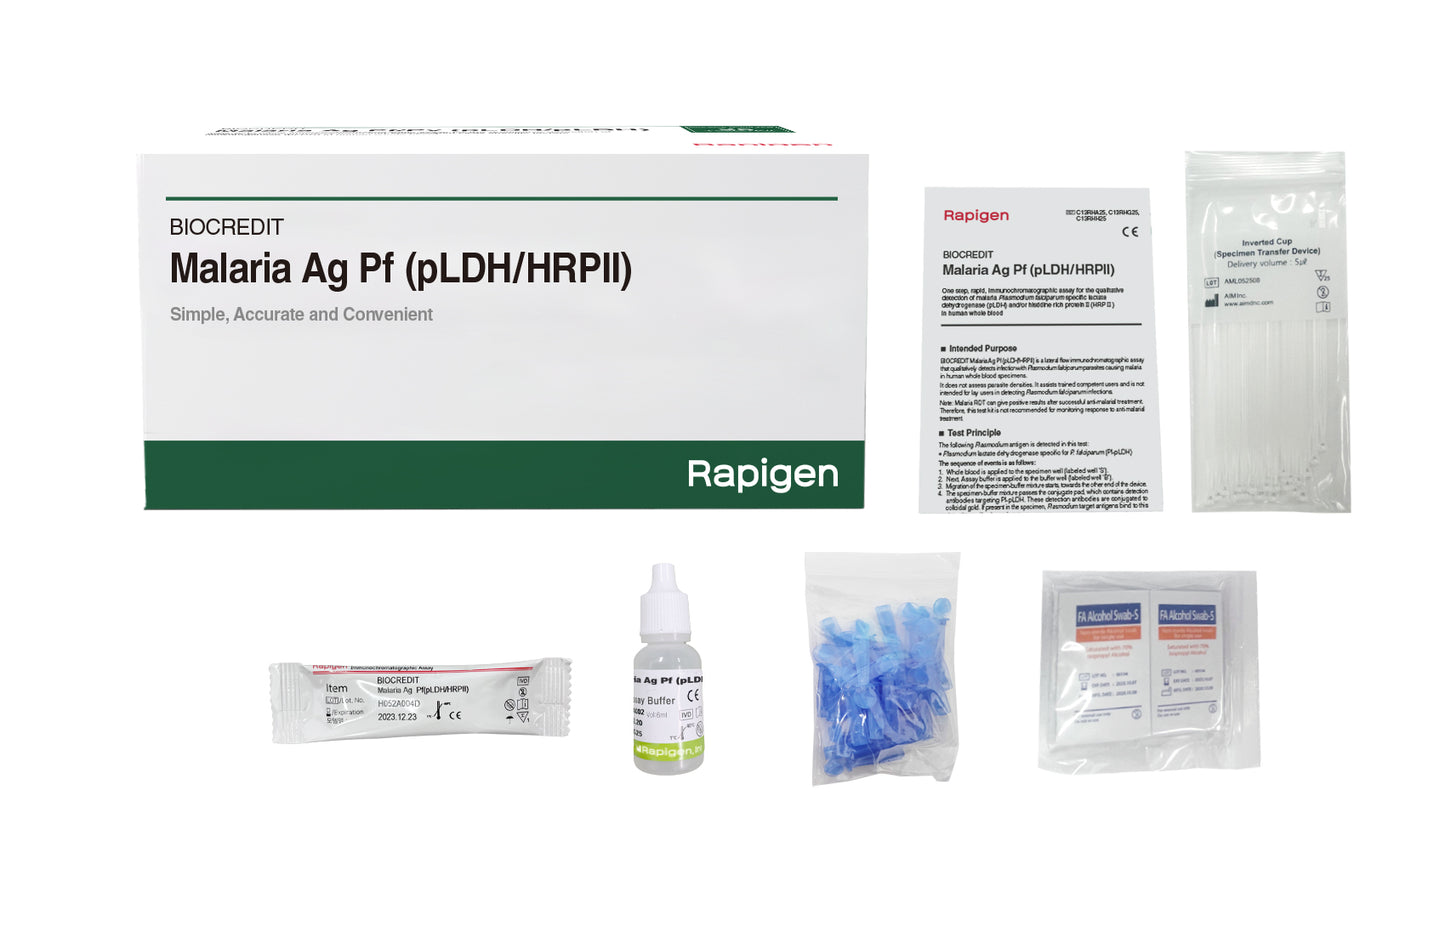 BIOCREDIT Malaria Ag Pf (pLDH/HRP II)